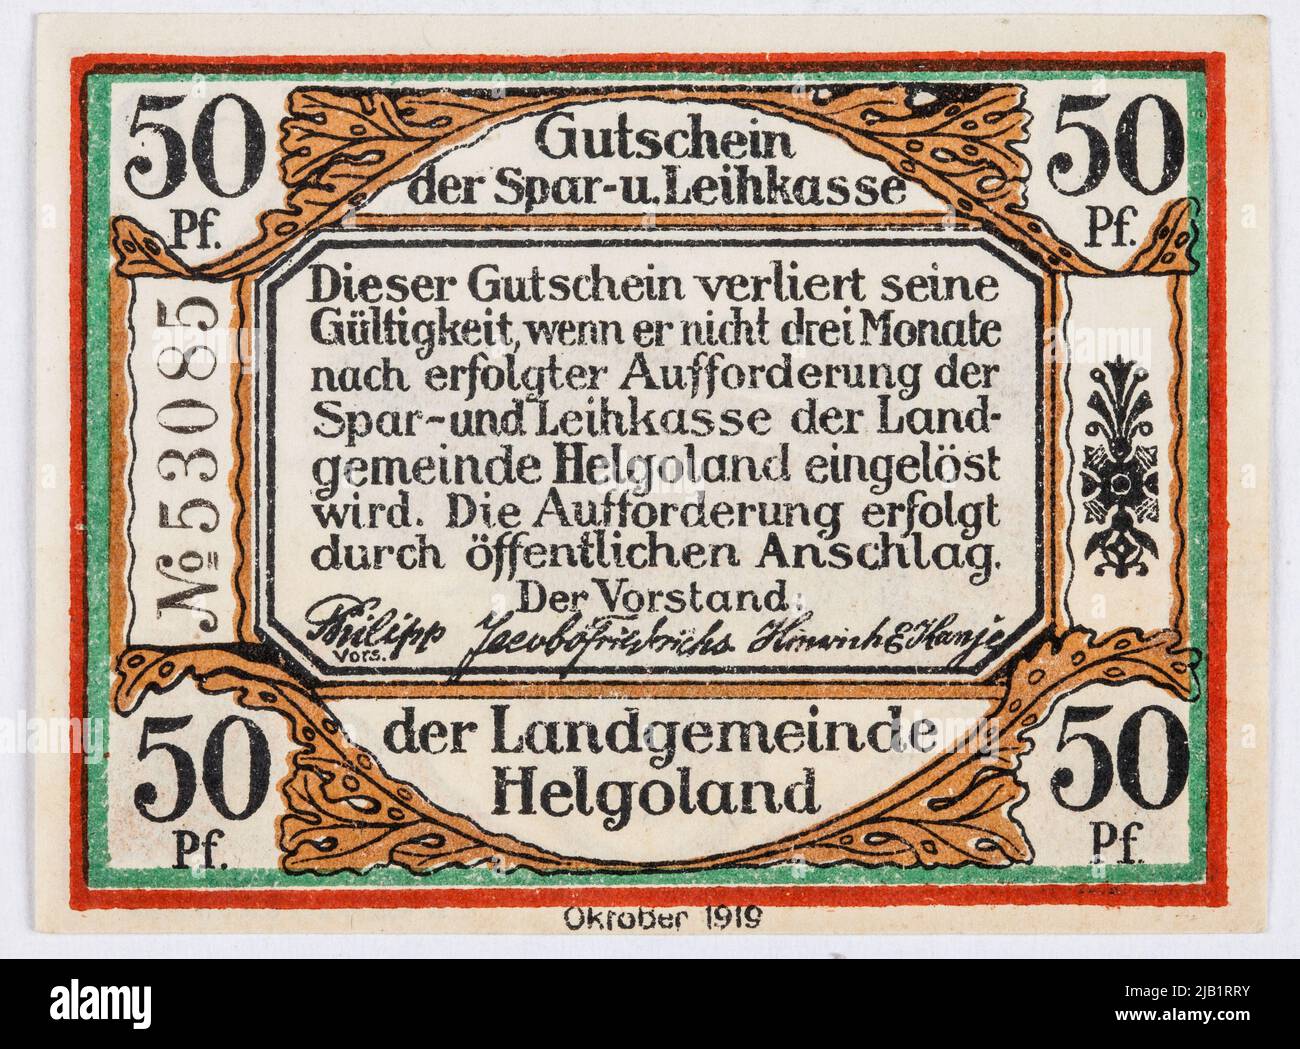 Foster Voucher AT 50 Pfennig, savings fund Leihkasse of the rural community, Helgoland, Germany, October 1919 H. W. Köbner, Altona Stock Photo